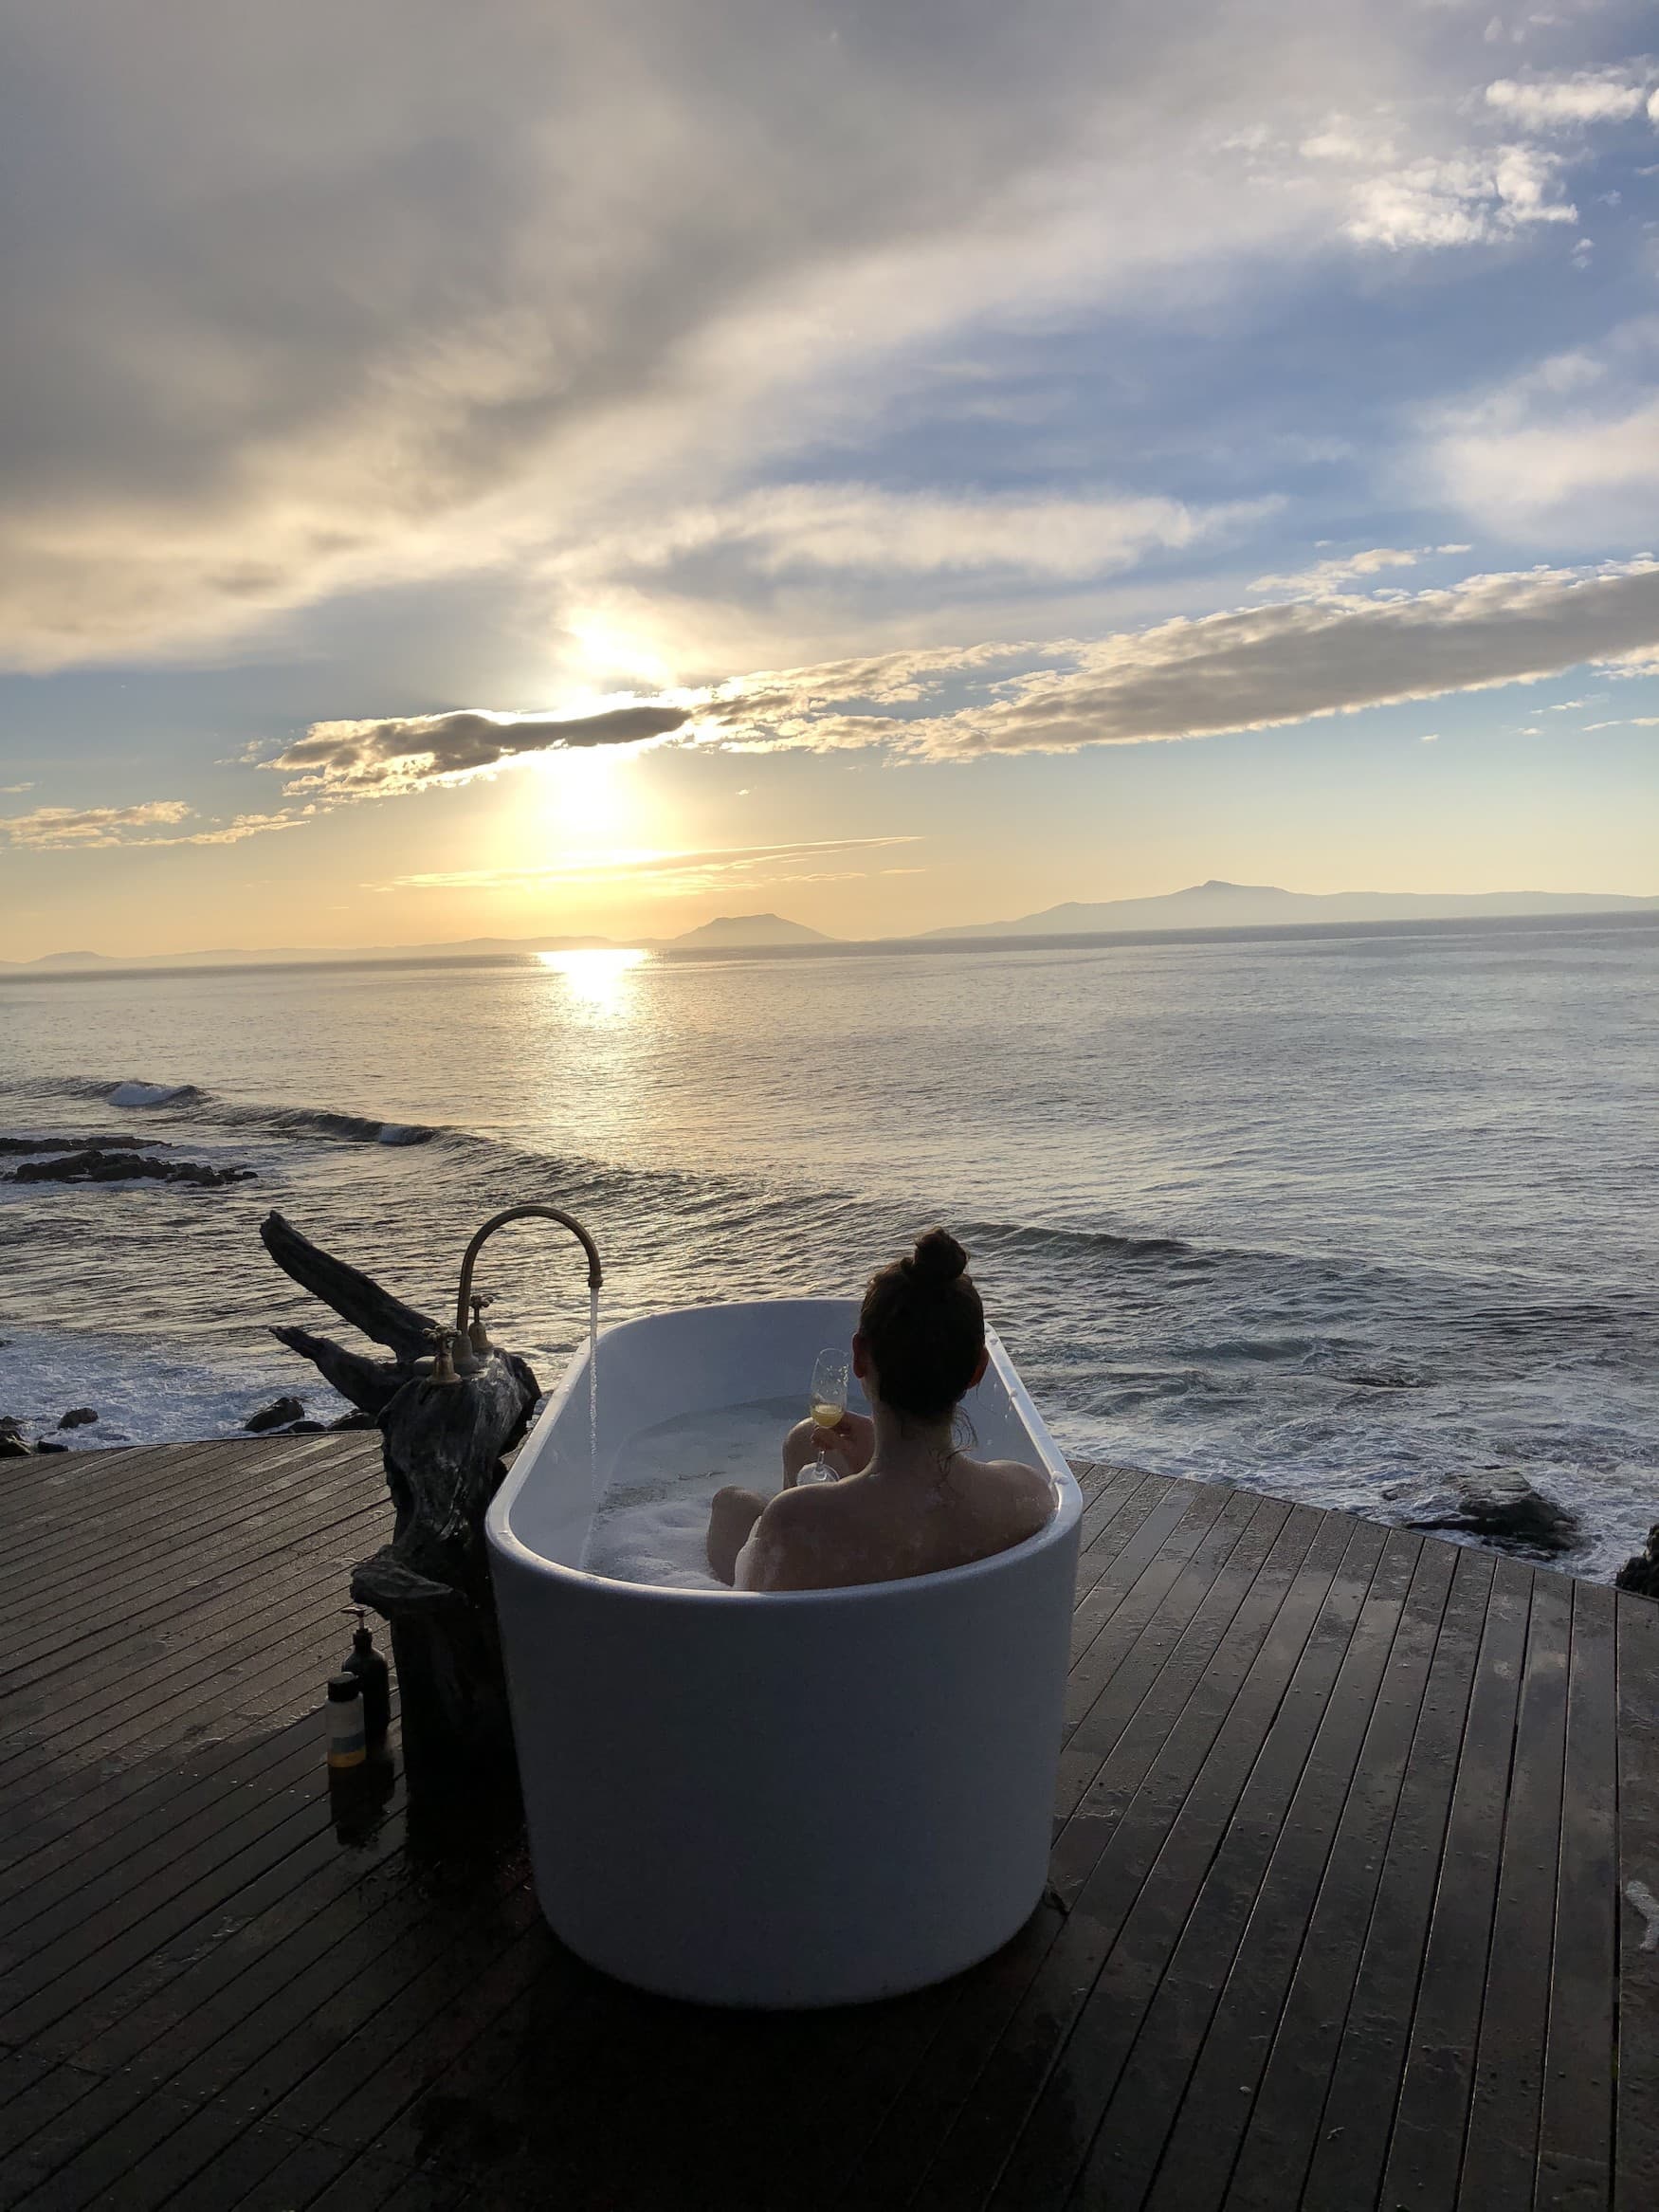 Frau liegt in Outdoor-Badewanne am Thalia Haven in Tasmanien